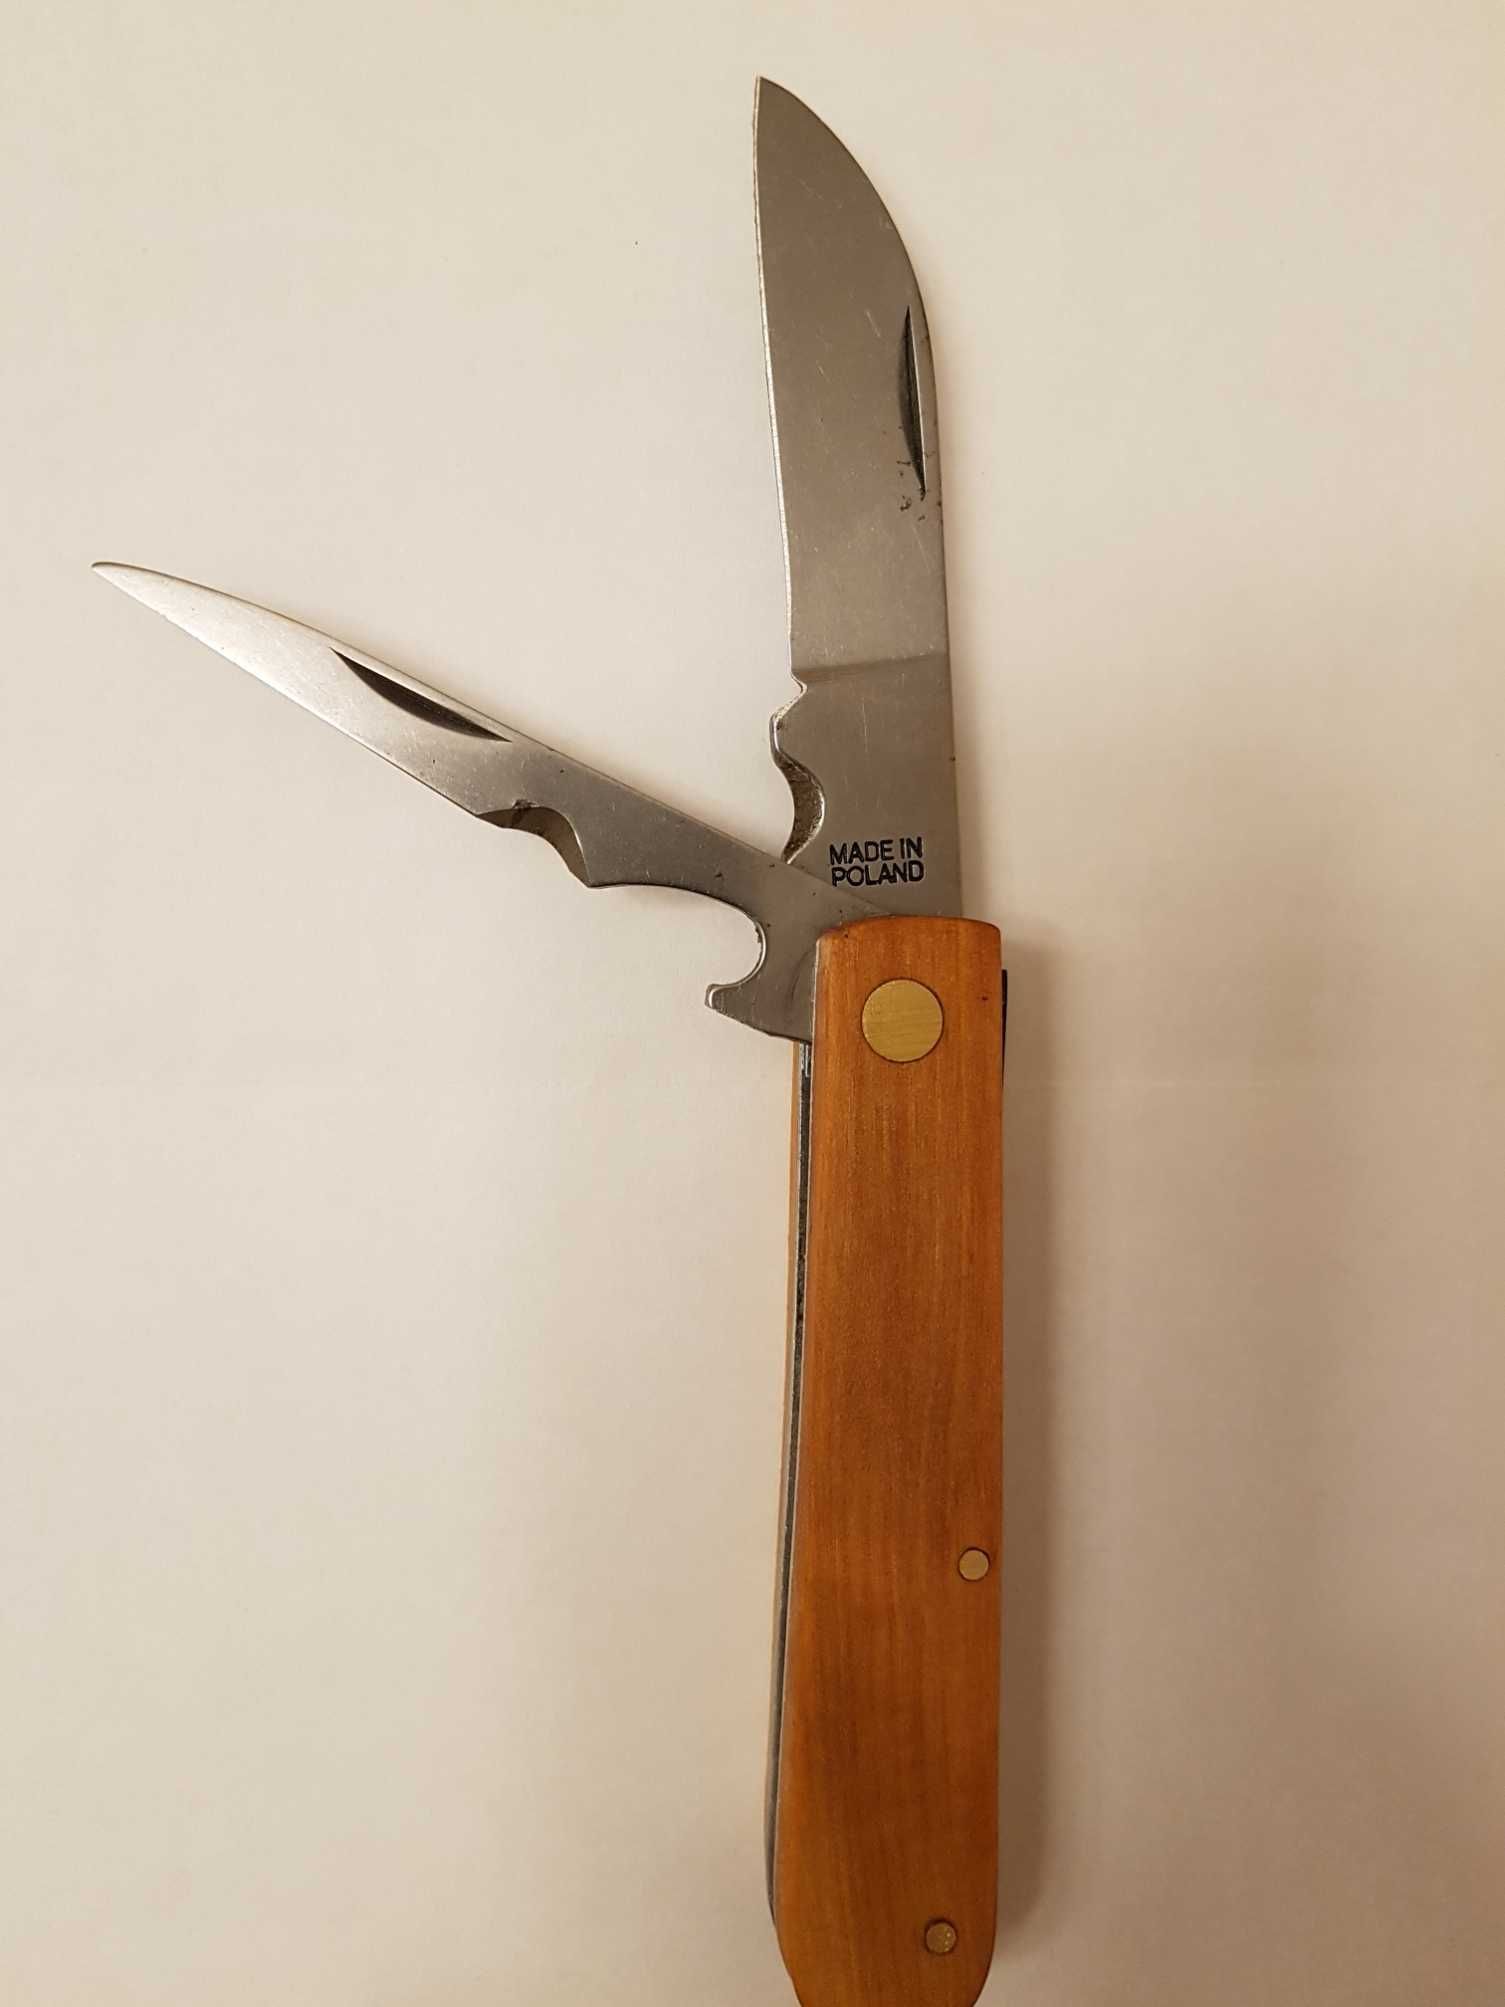 Nóż, scyzoryk monterski typ Gerlach nk 332 ze szpikulcem